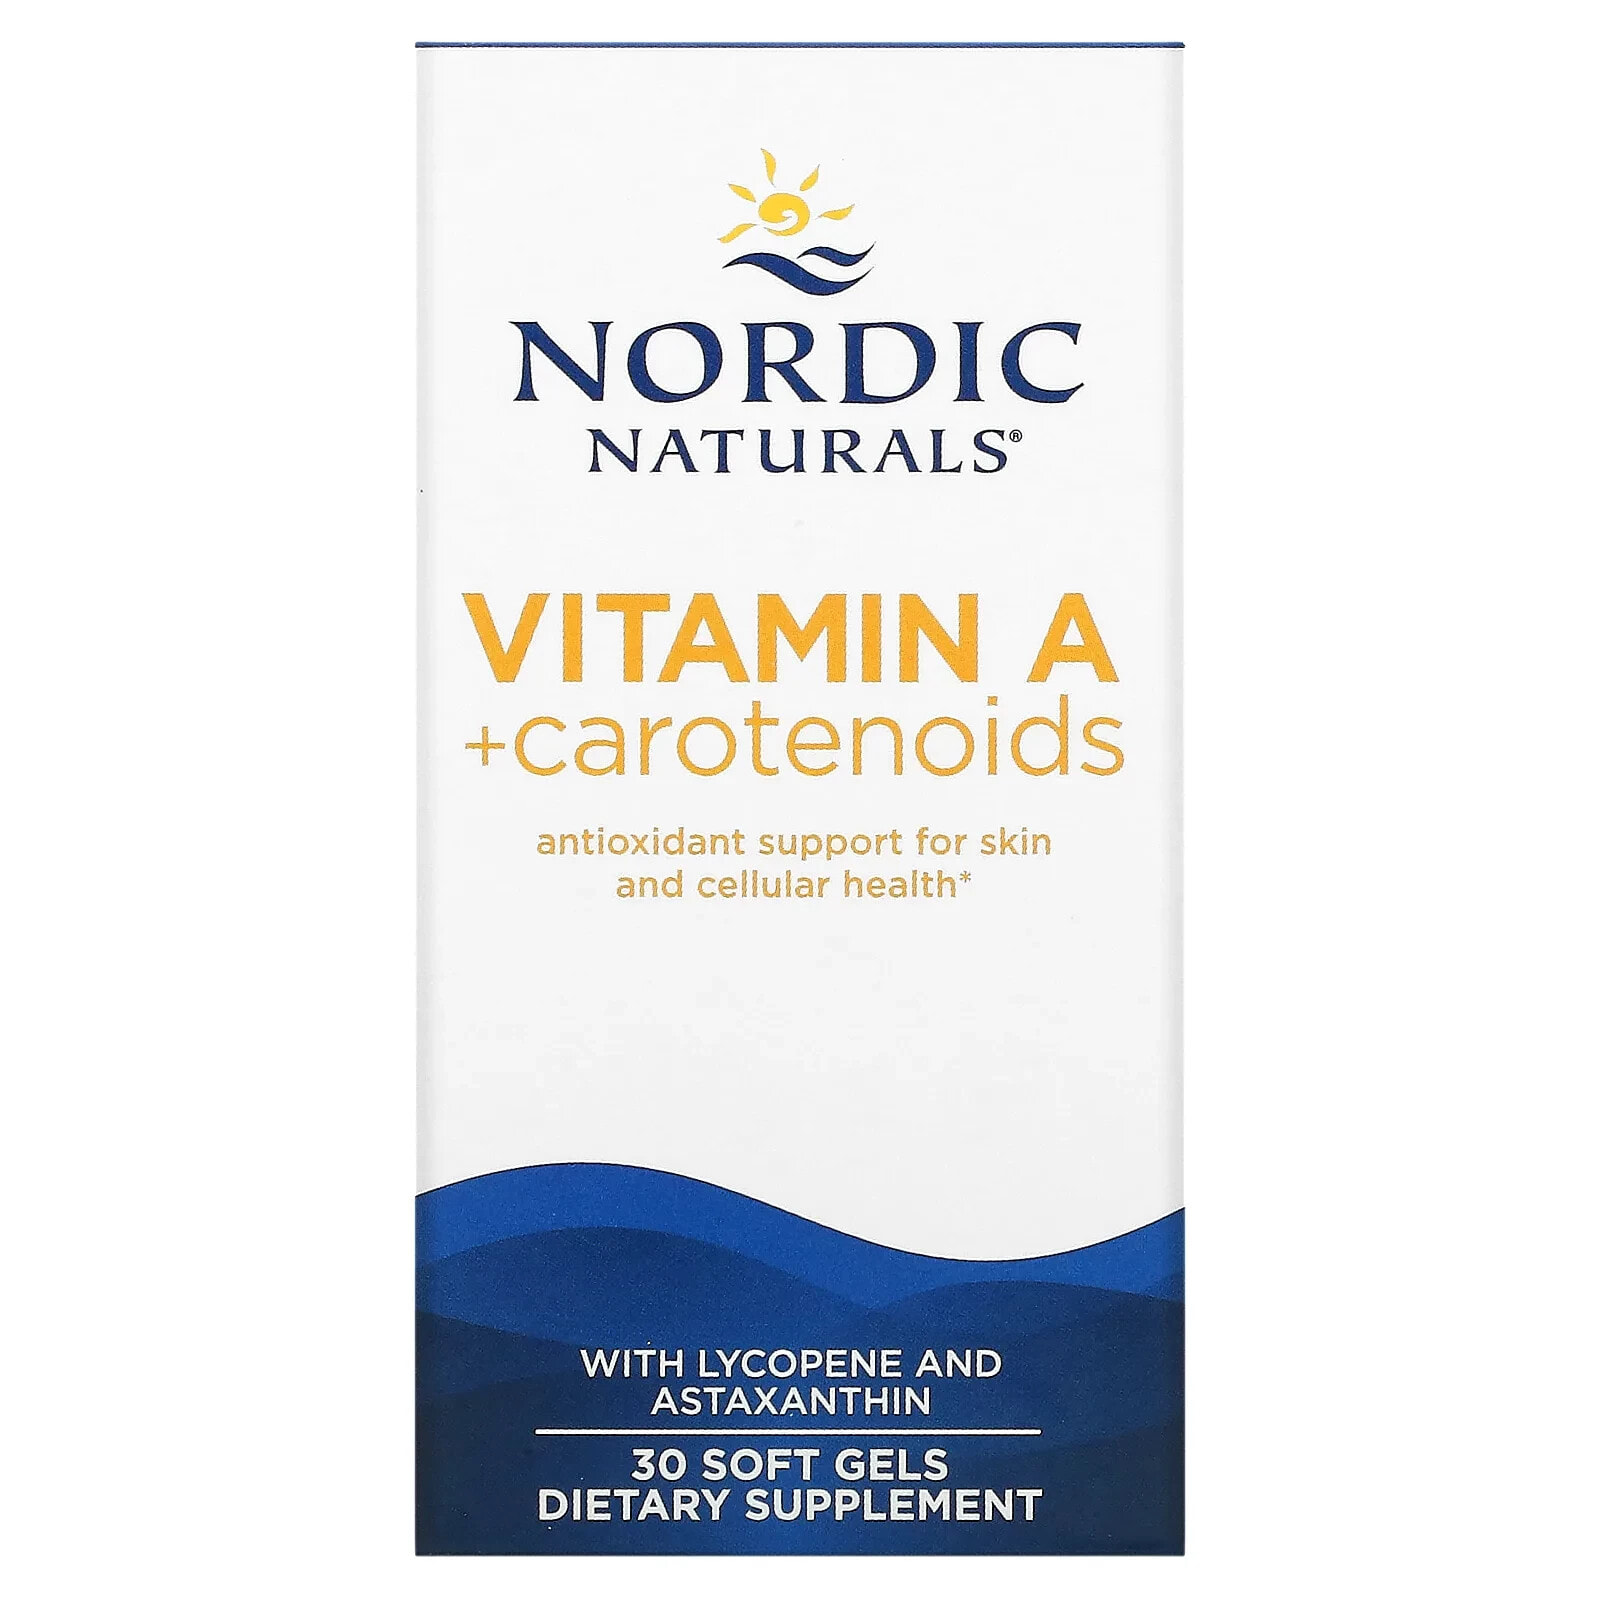 Нордик Натуралс, Витамин A + каротиноиды, 30 мягких таблеток